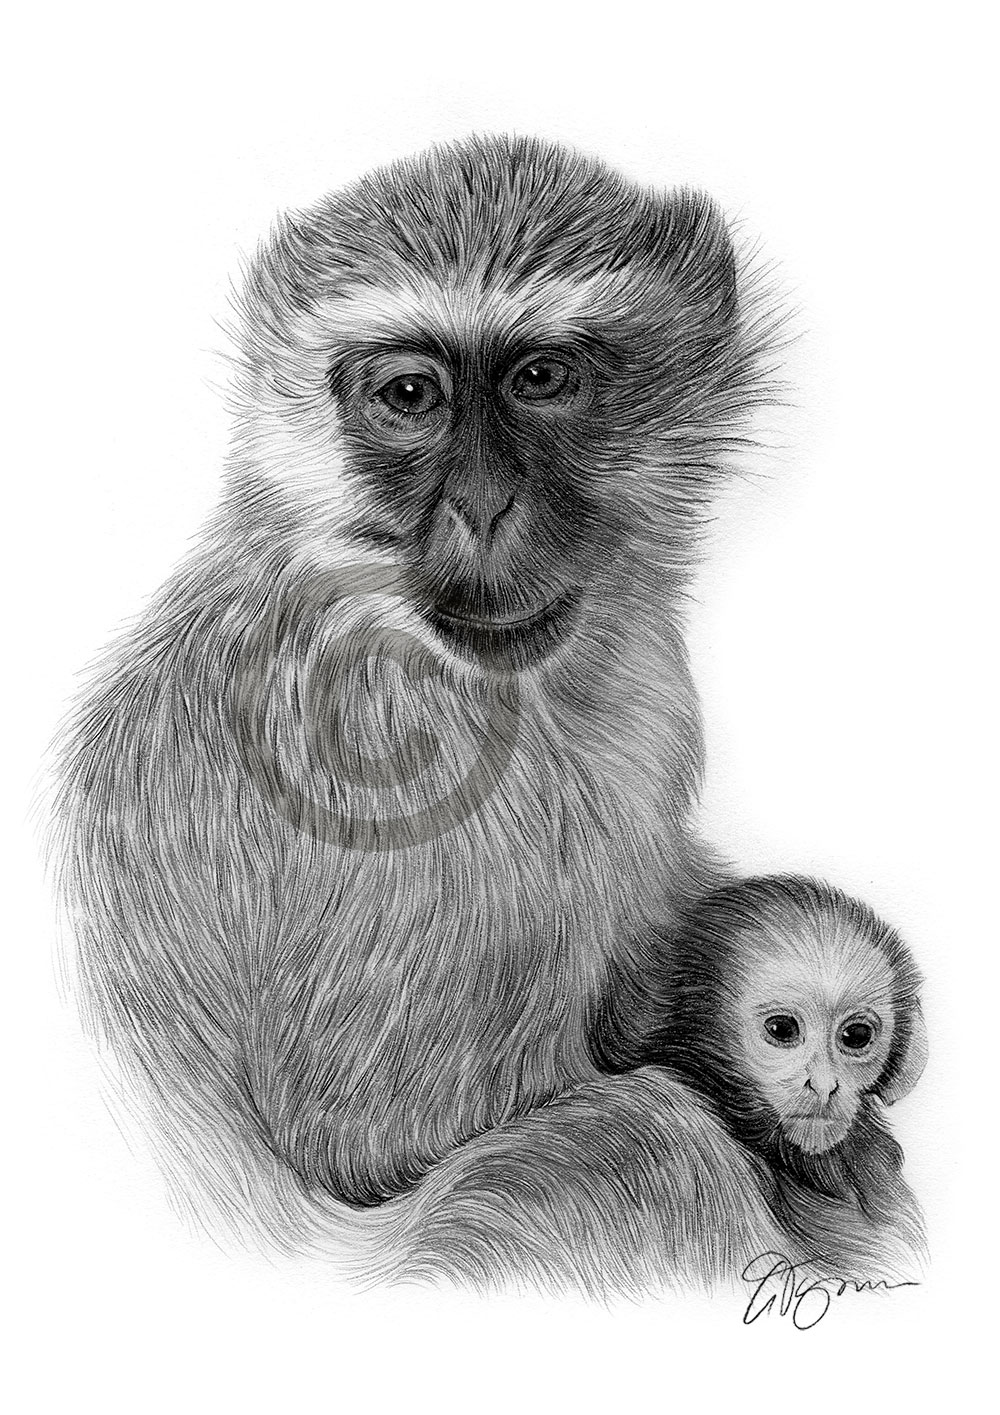 Pencil drawing of a vervet monkey by artist Gary Tymon